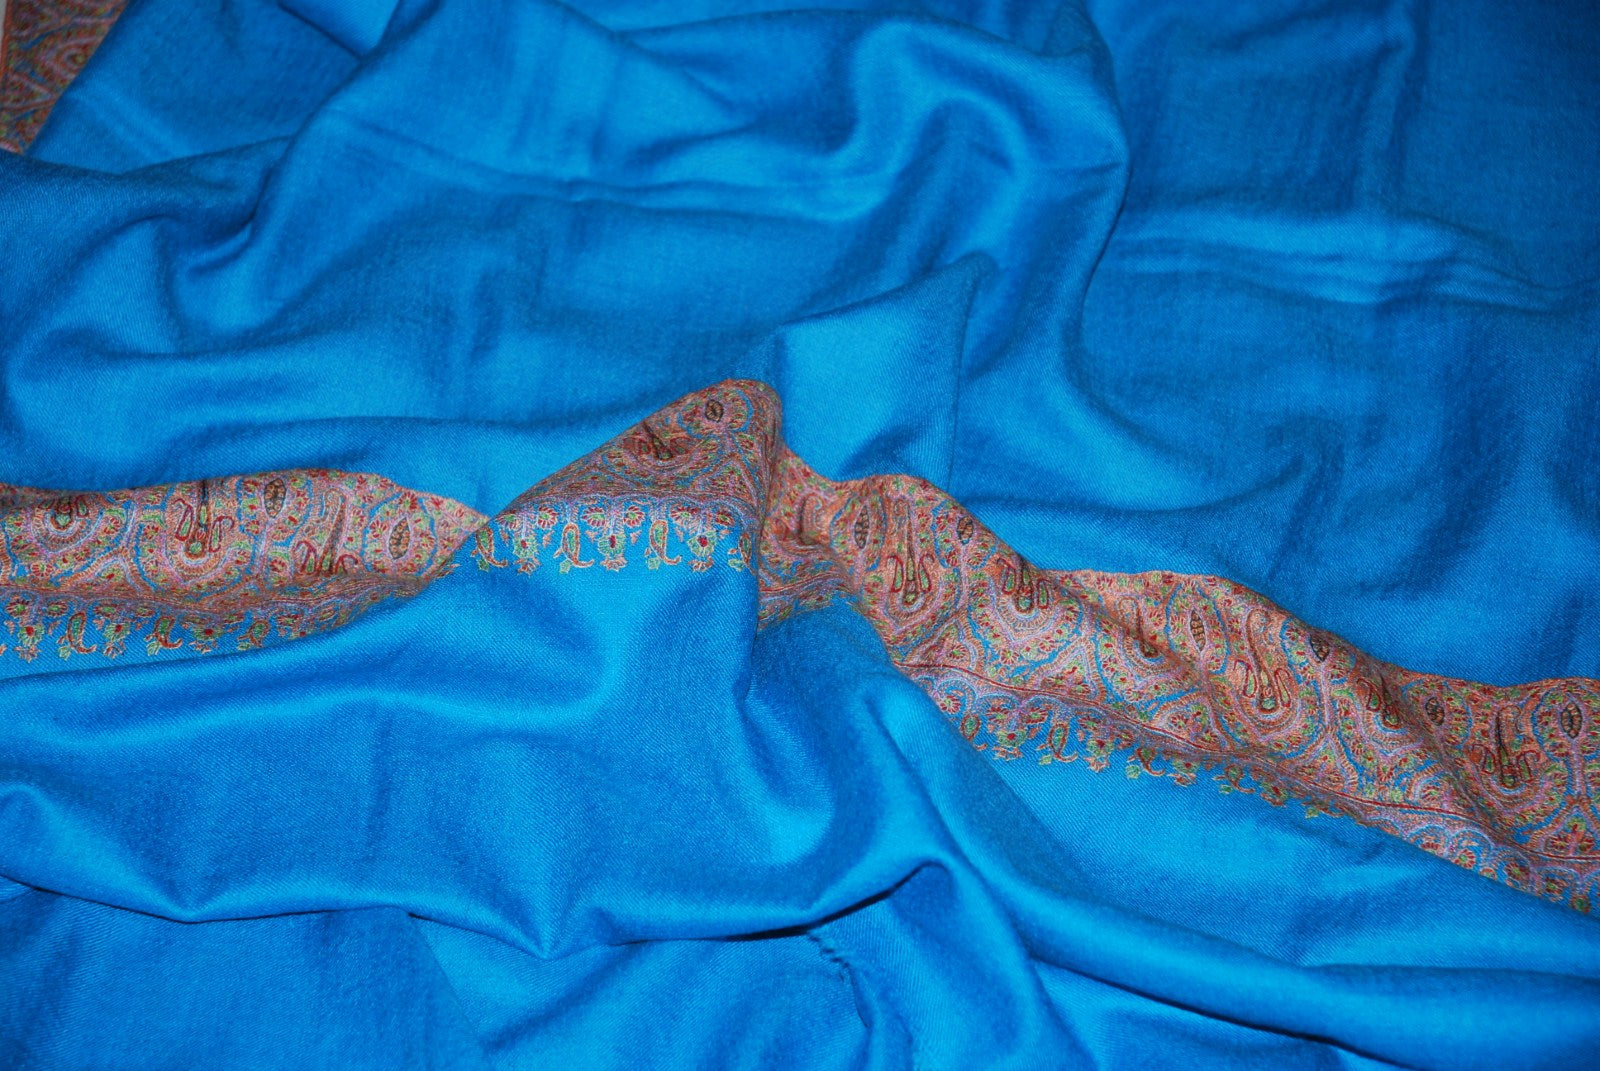 Kashmir Pashmina "Cashmere" Shawl Sky Blue, Multicolor Embroidery #PDR-012